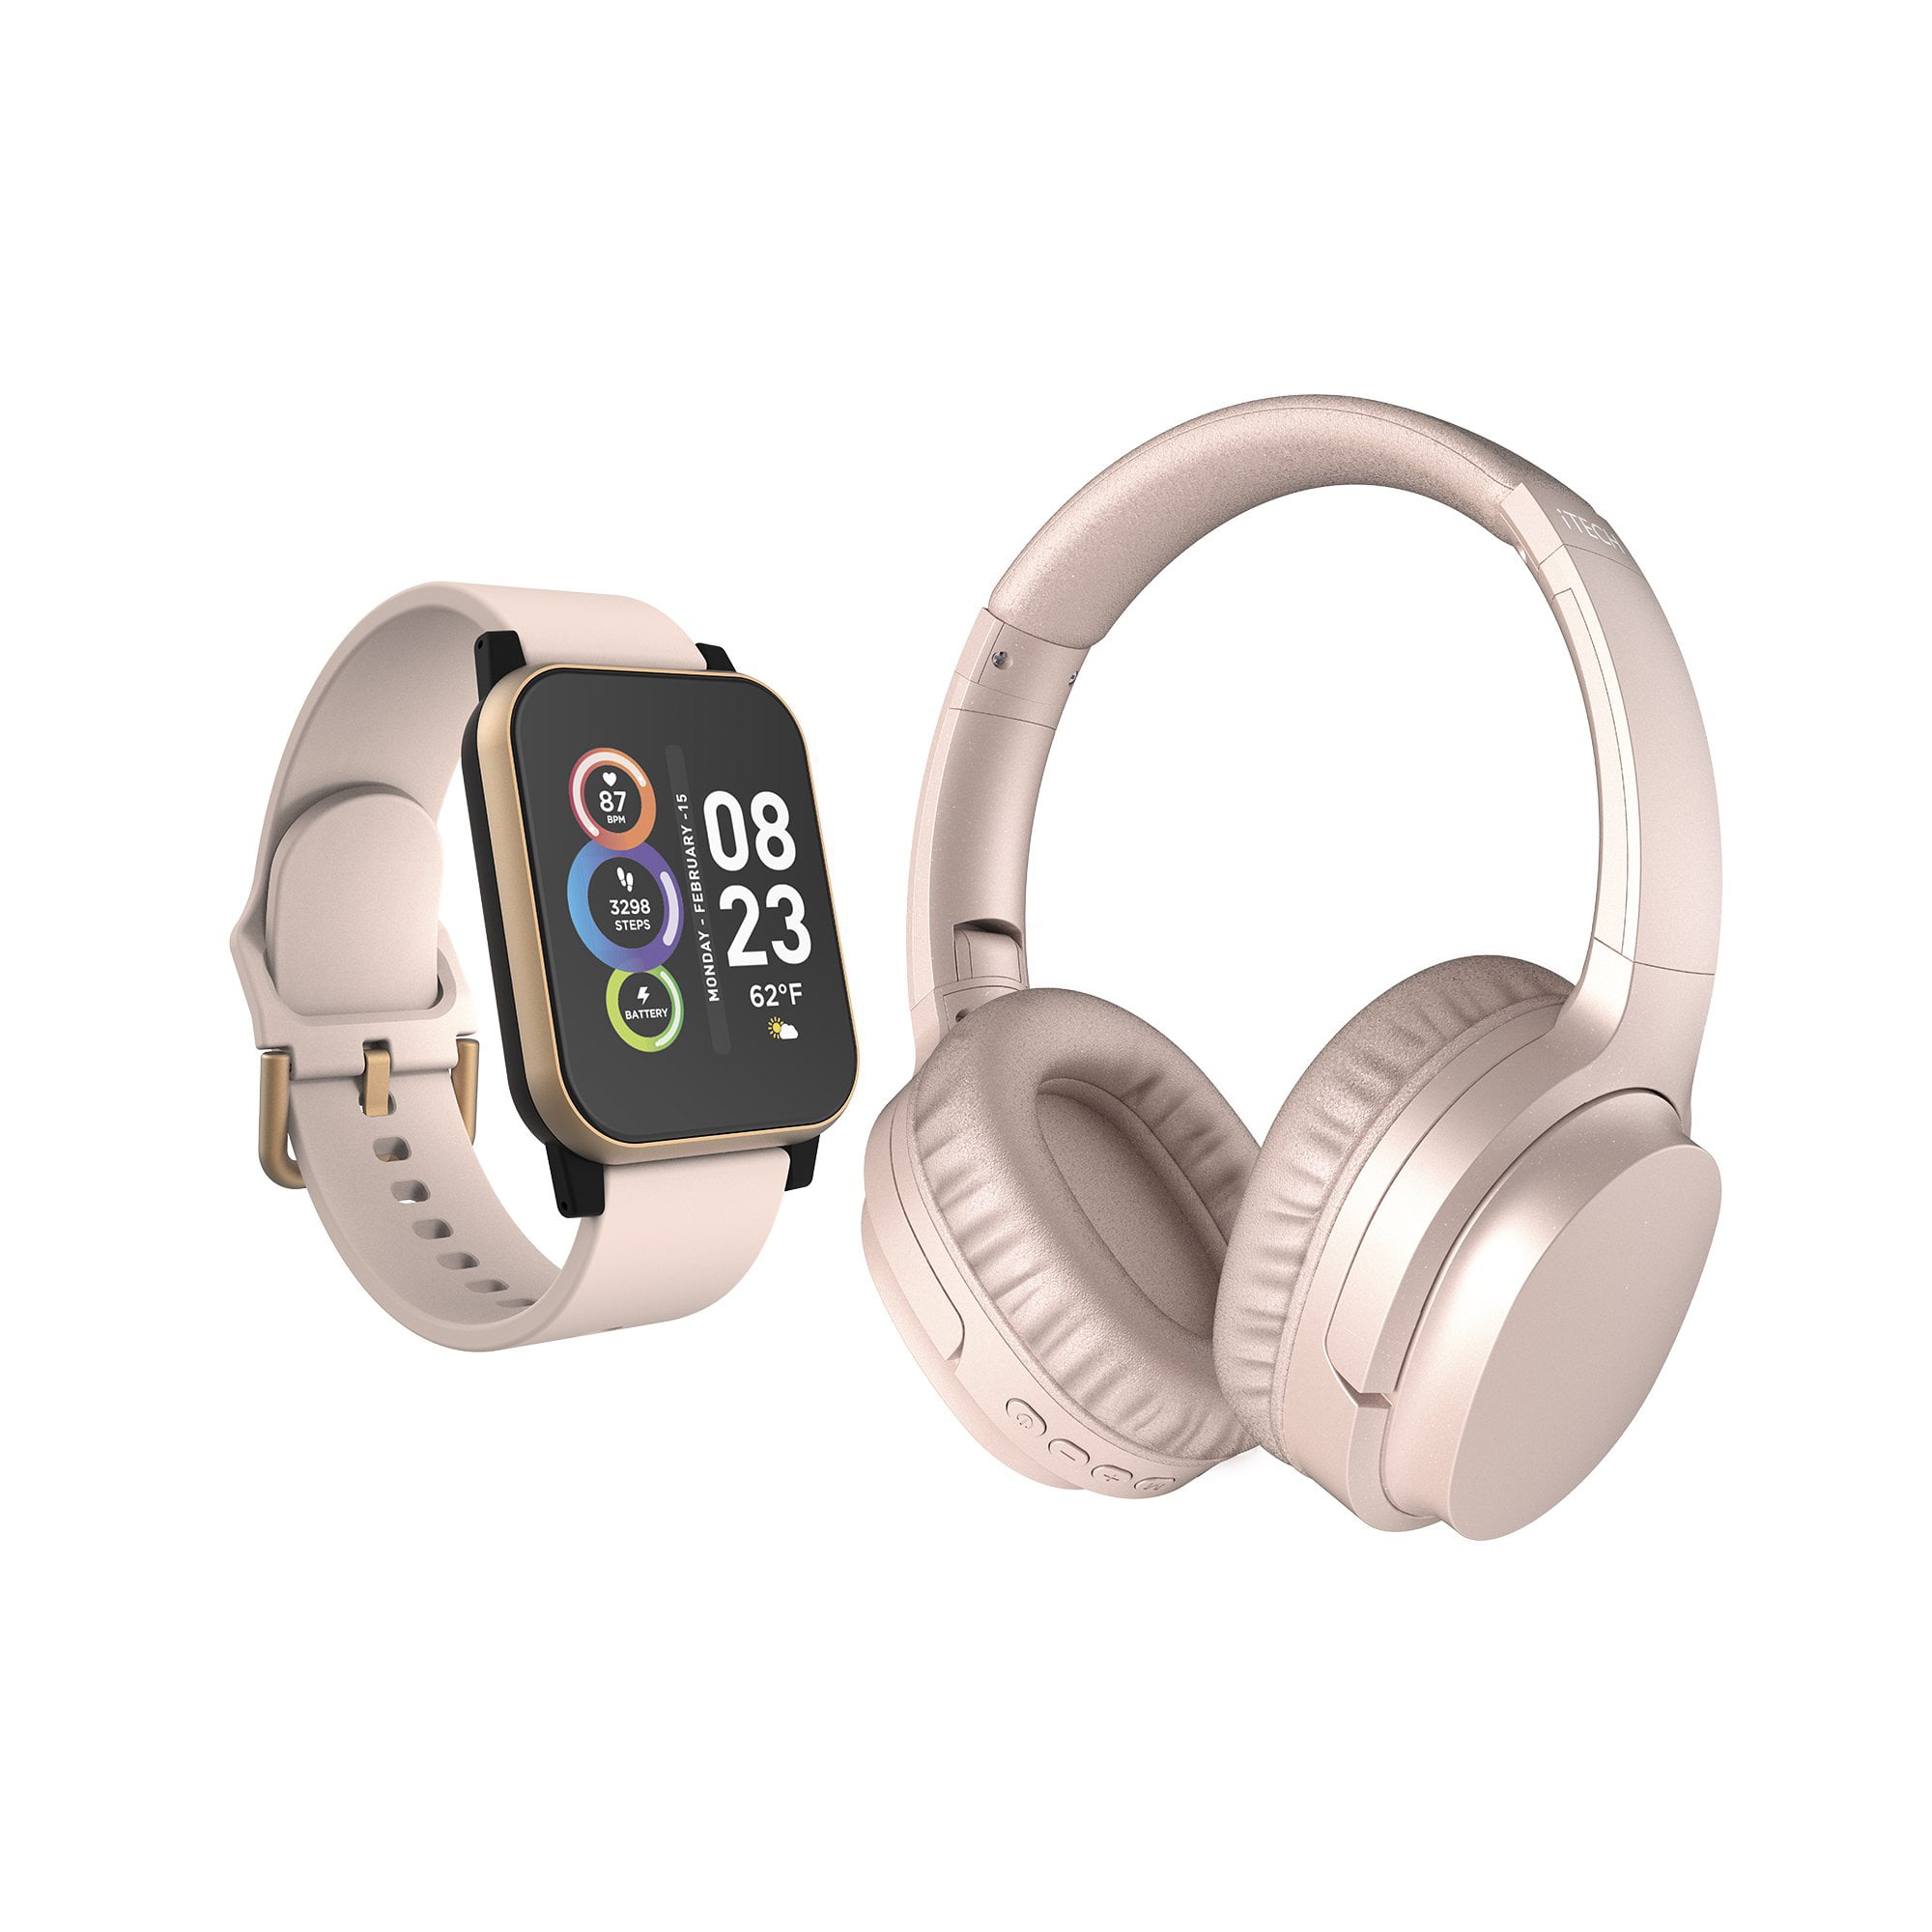 iTech Fusion 2 Unisex Smart Watch with Wireless Headphone $14.50 + Free S&H w/ Walmart+ or $35+